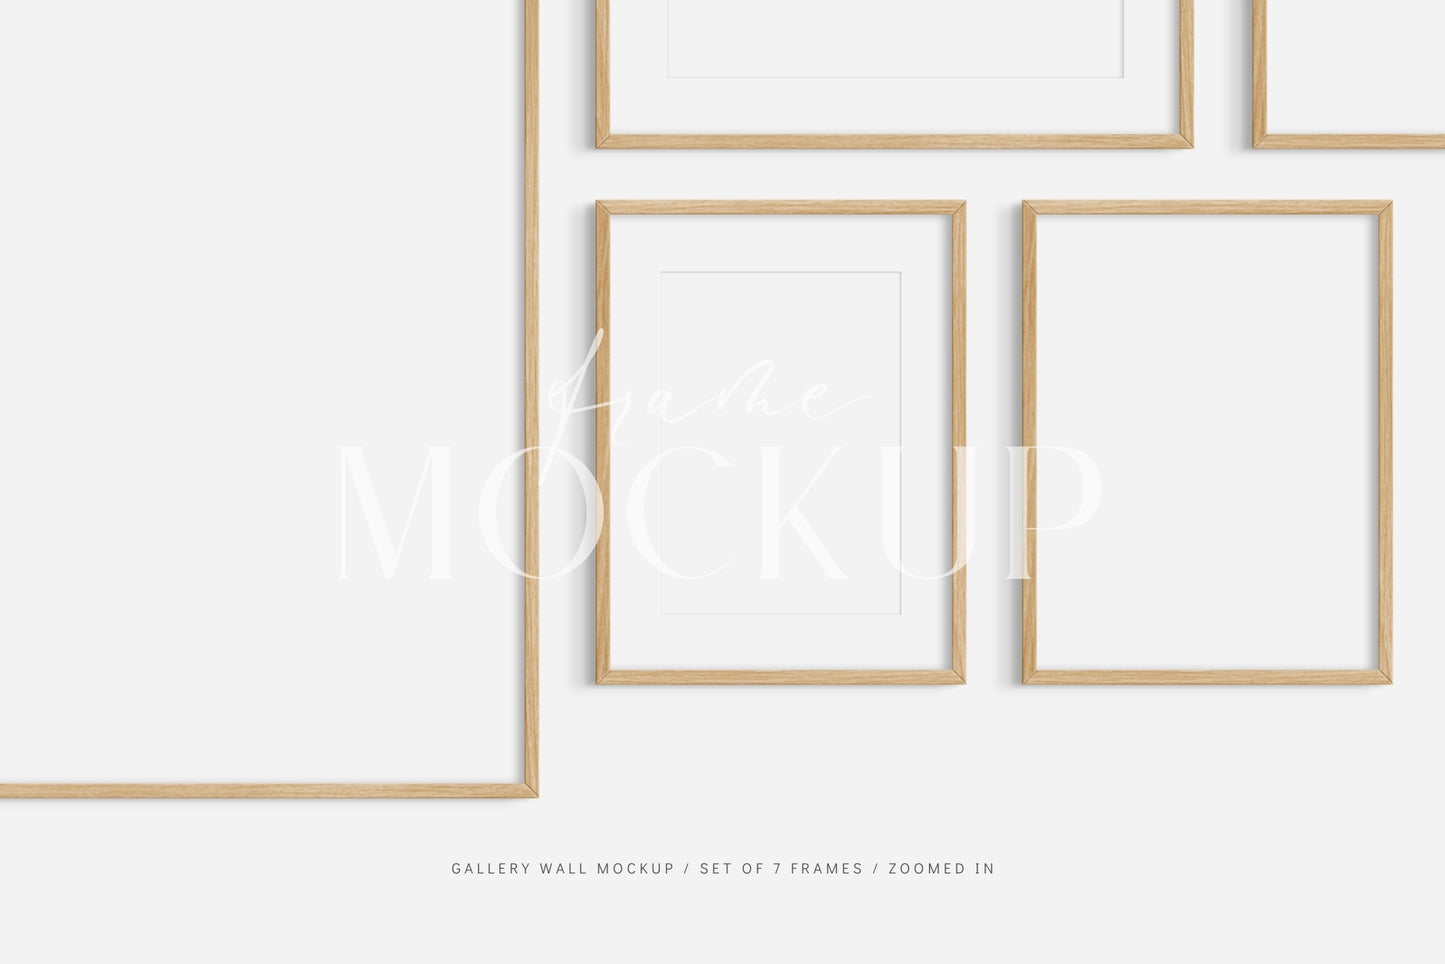 Gallery Wall Mockup | Frame Mockup Set of 7 Frames | Wall Art Mockup | PSD Template